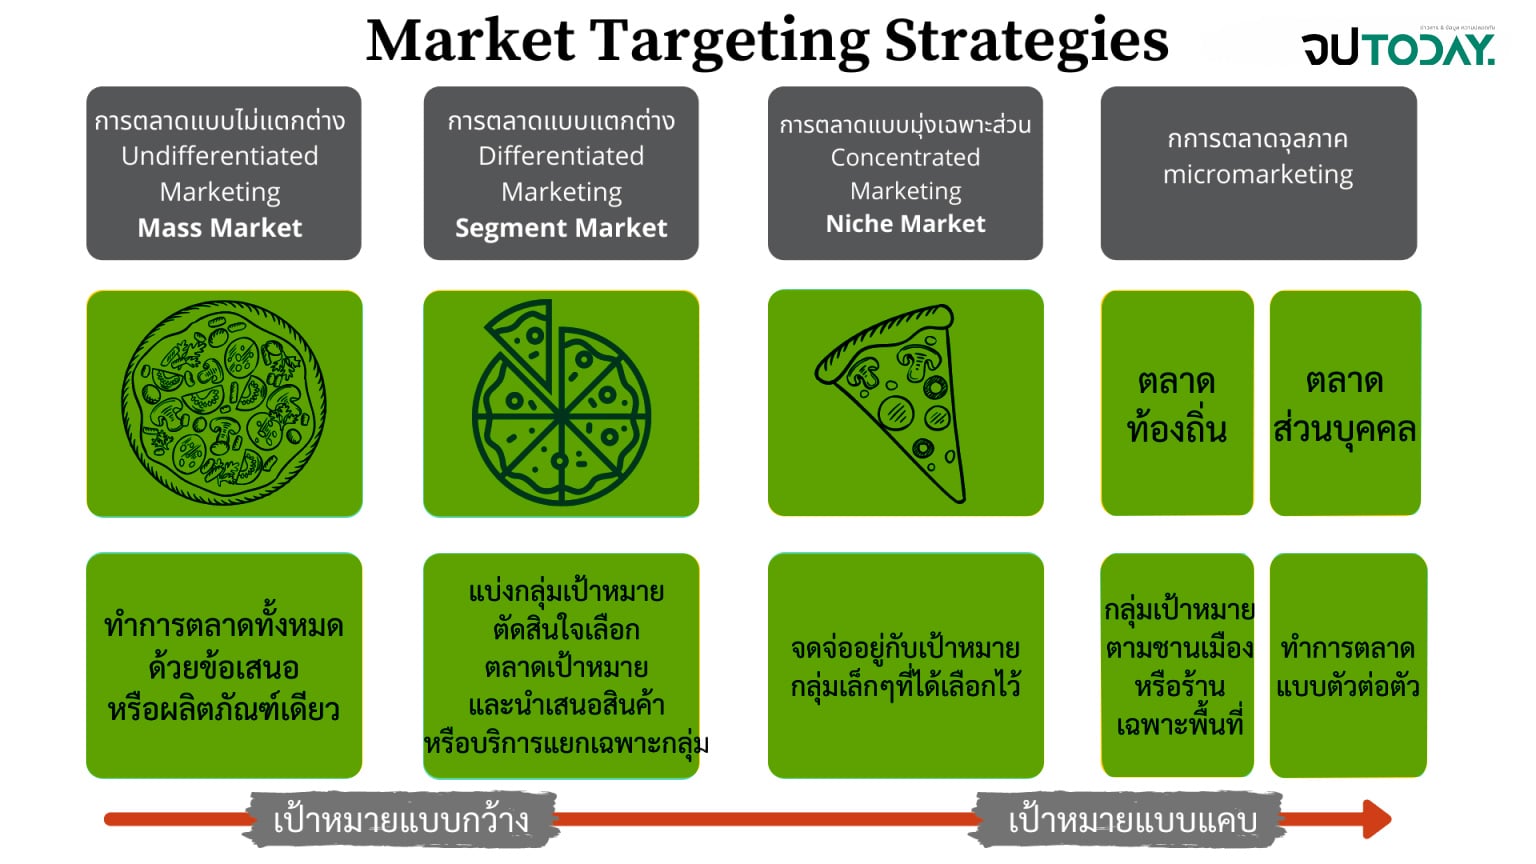 4.Market-Targeting-Strategies-jorportoday-1536x864